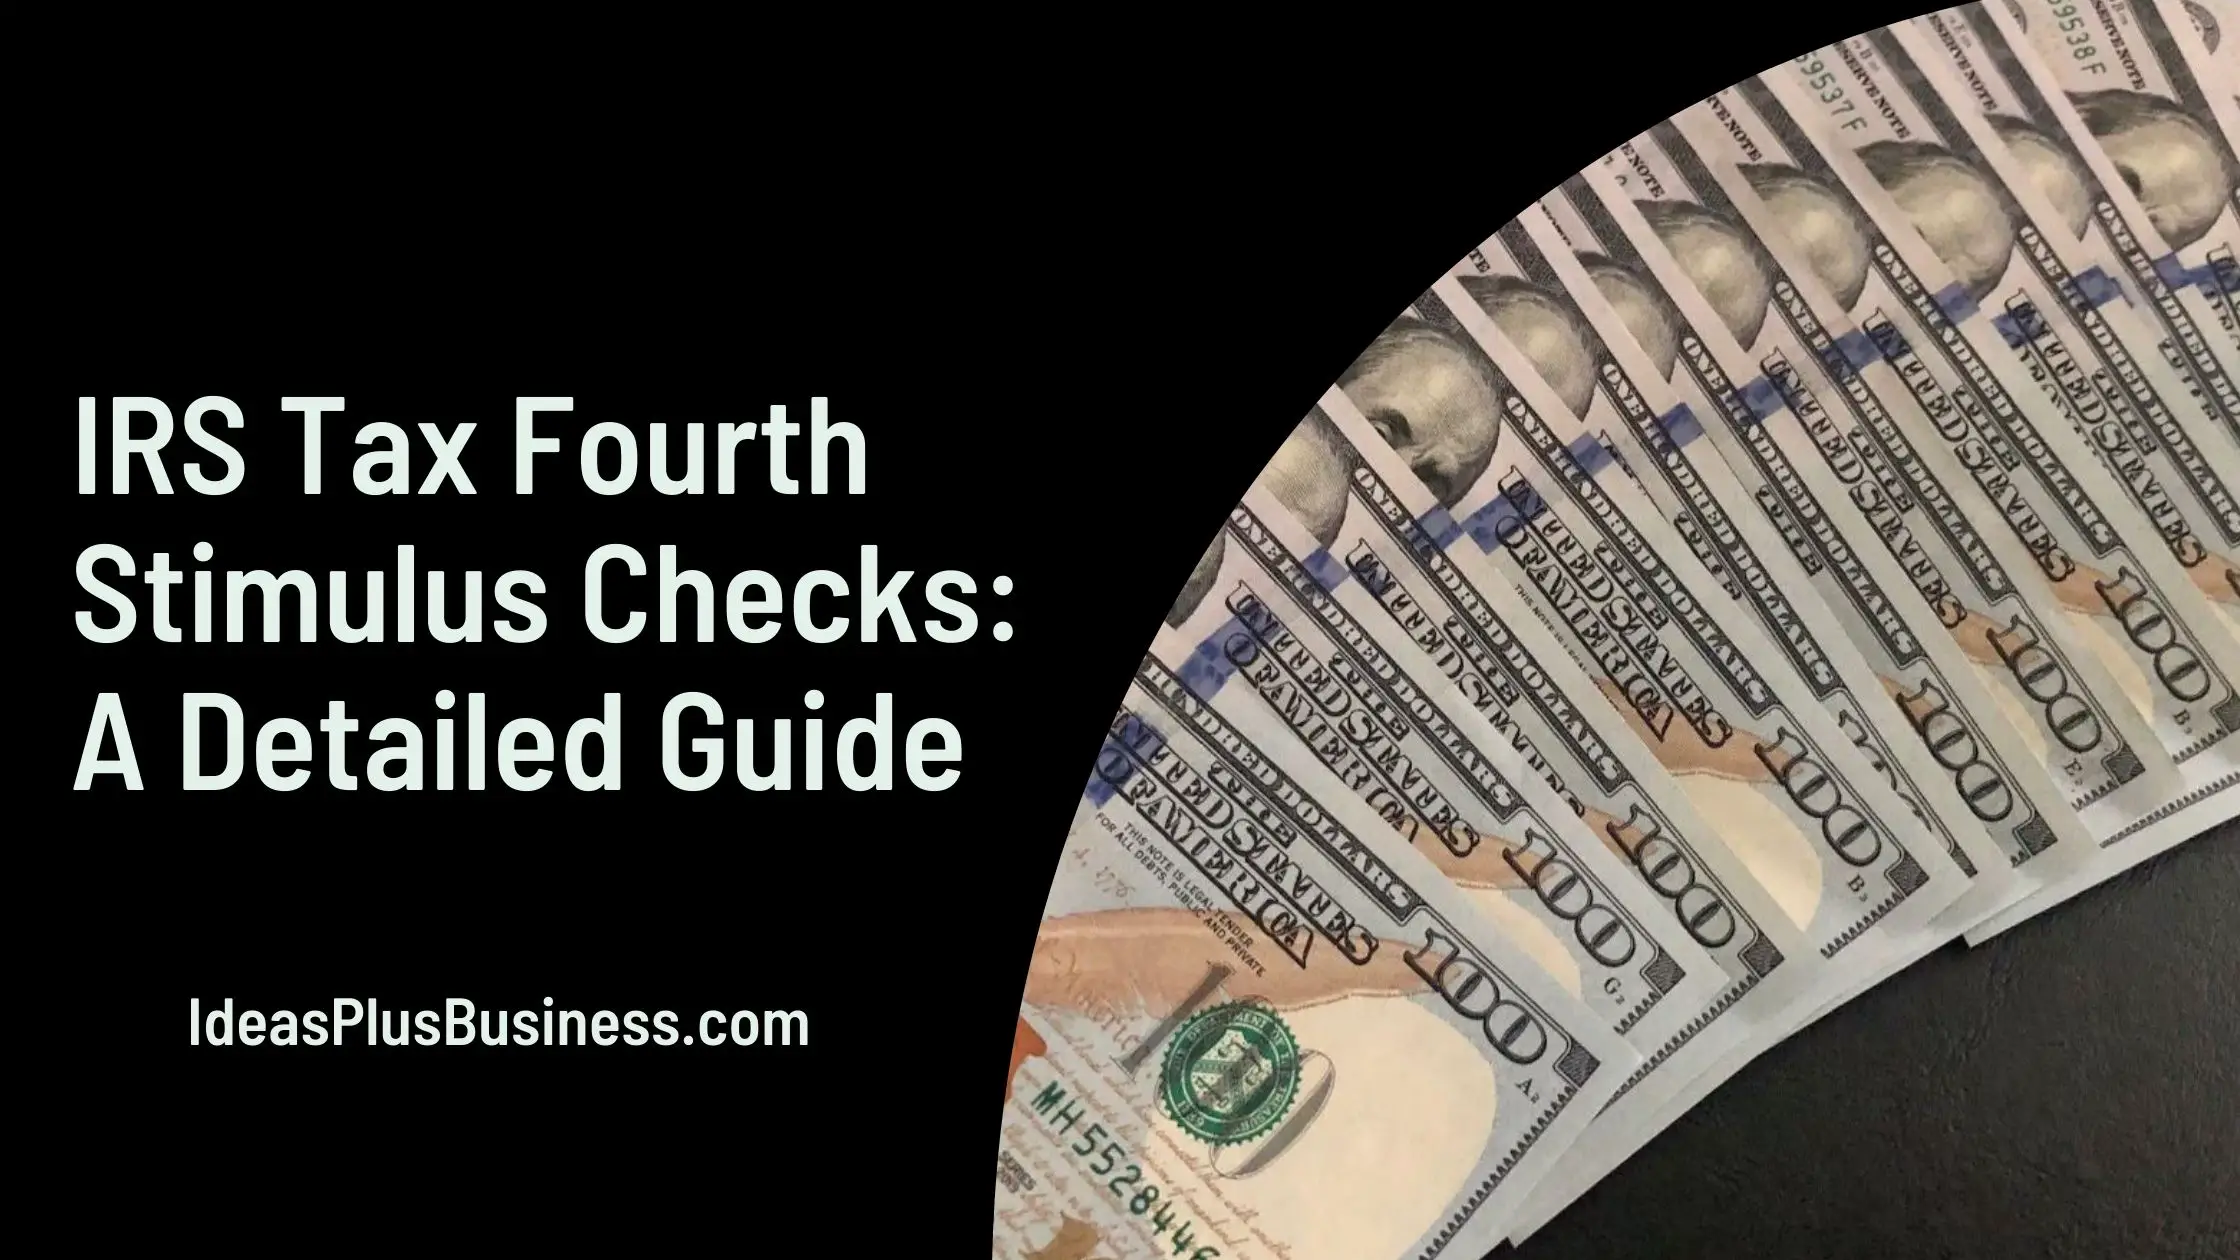 IRS Tax Fourth Stimulus Checks: A Detailed Guide